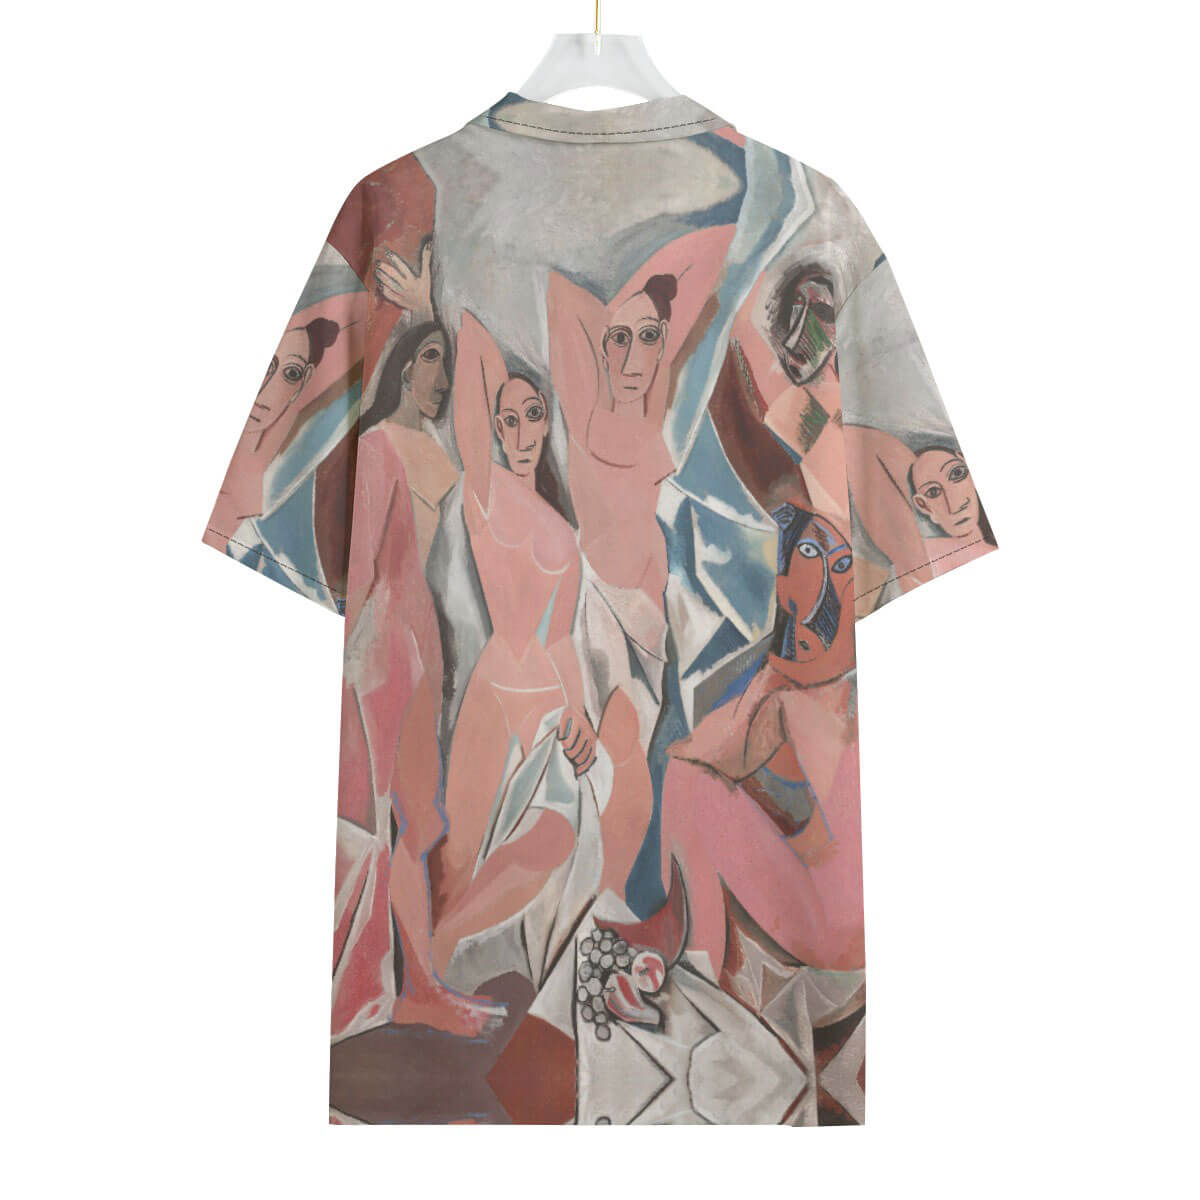 Modern art fashion: Les Demoiselles d'Avignon shirt